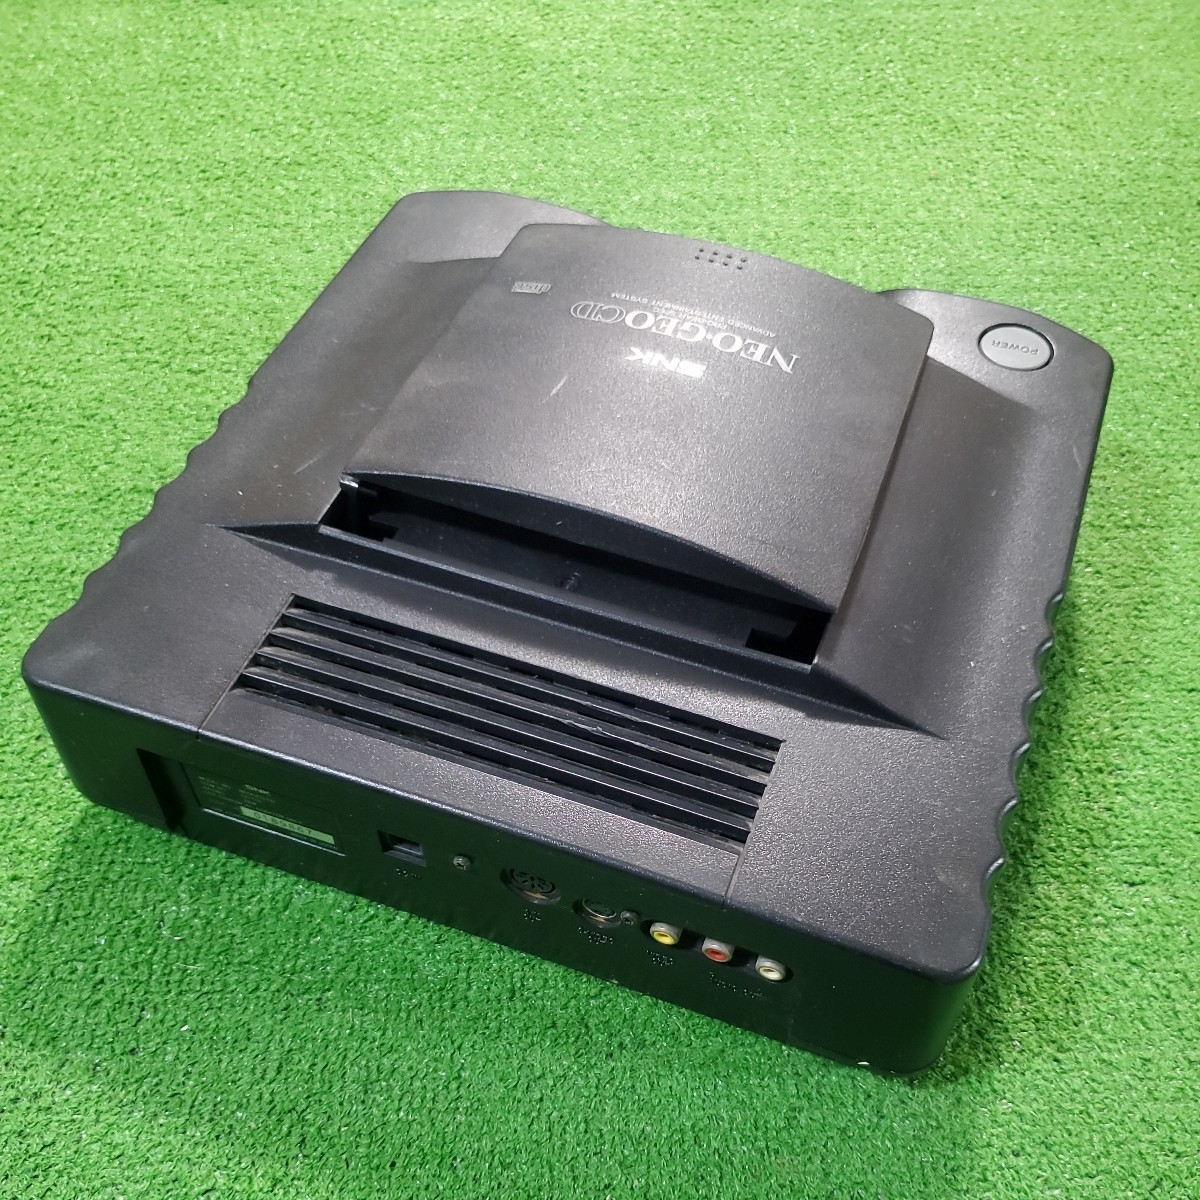 SNK NEOGEO-CD NEO-GEO ネオジオCD 本体 CD-T01 通電確認済み コントローラー 2個 コントローラ ゲーム機器 希少品 ネオジオ_画像5